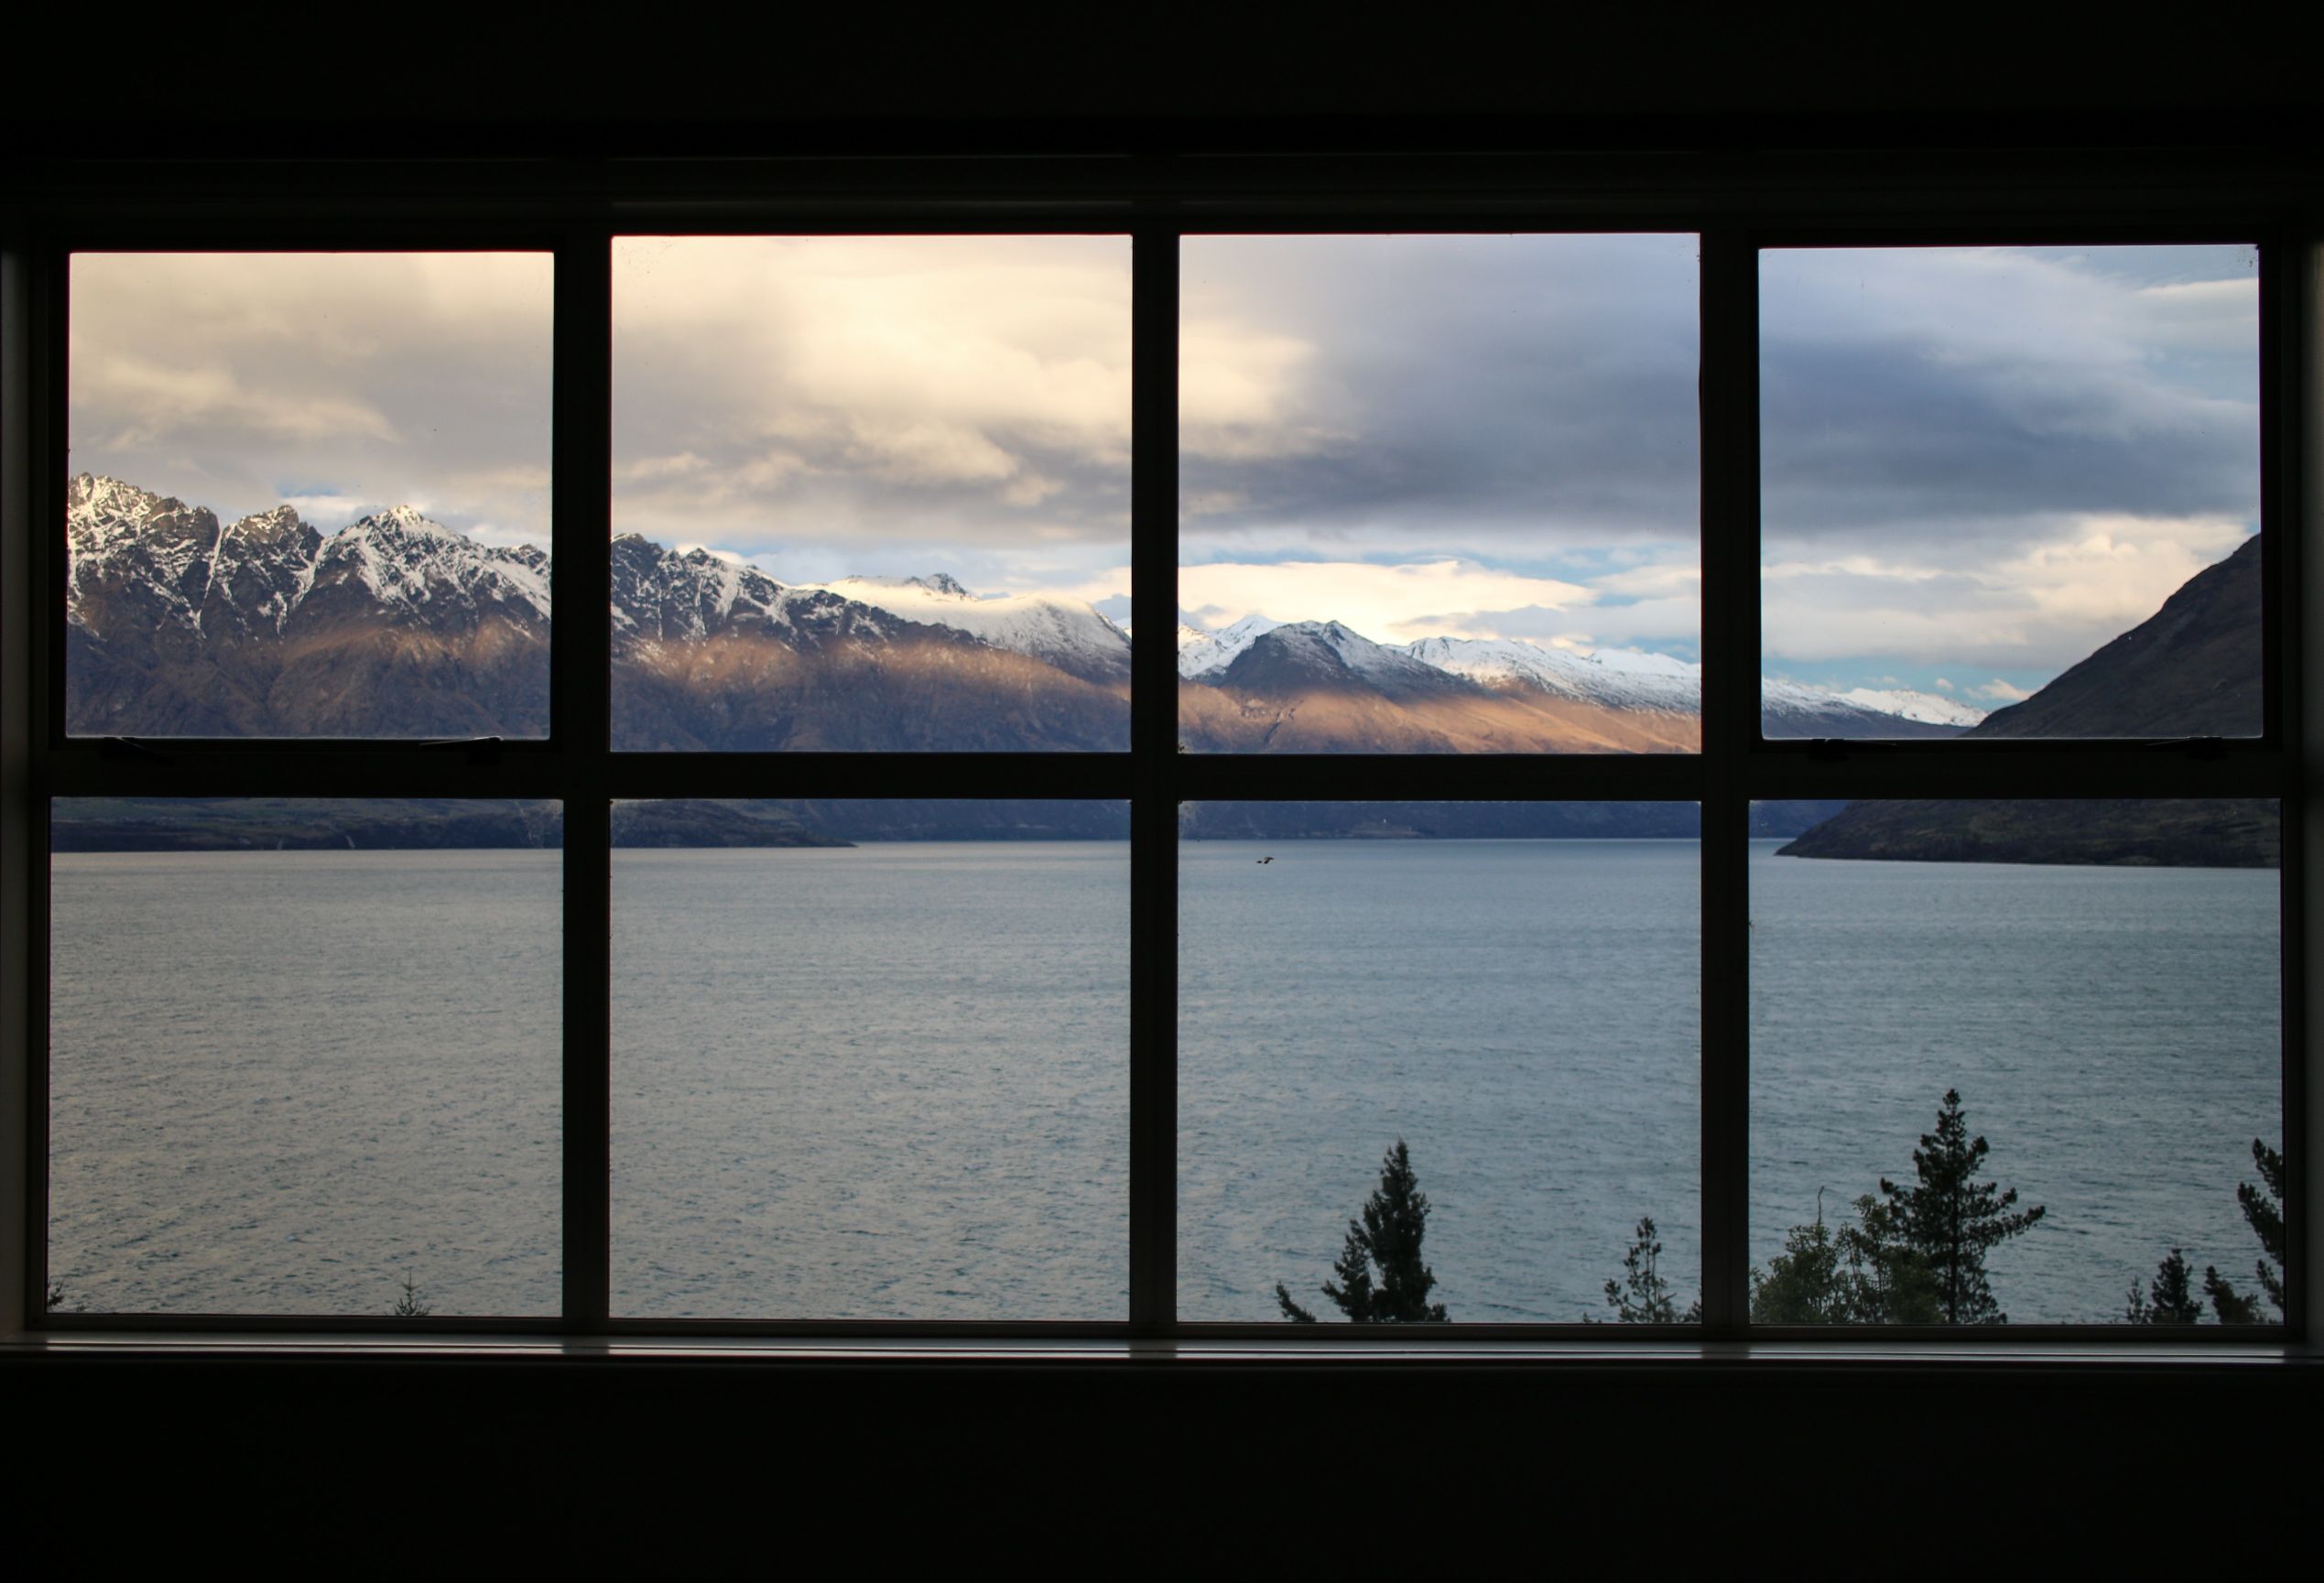 A view of snowy mountains and a lake taken through a window.